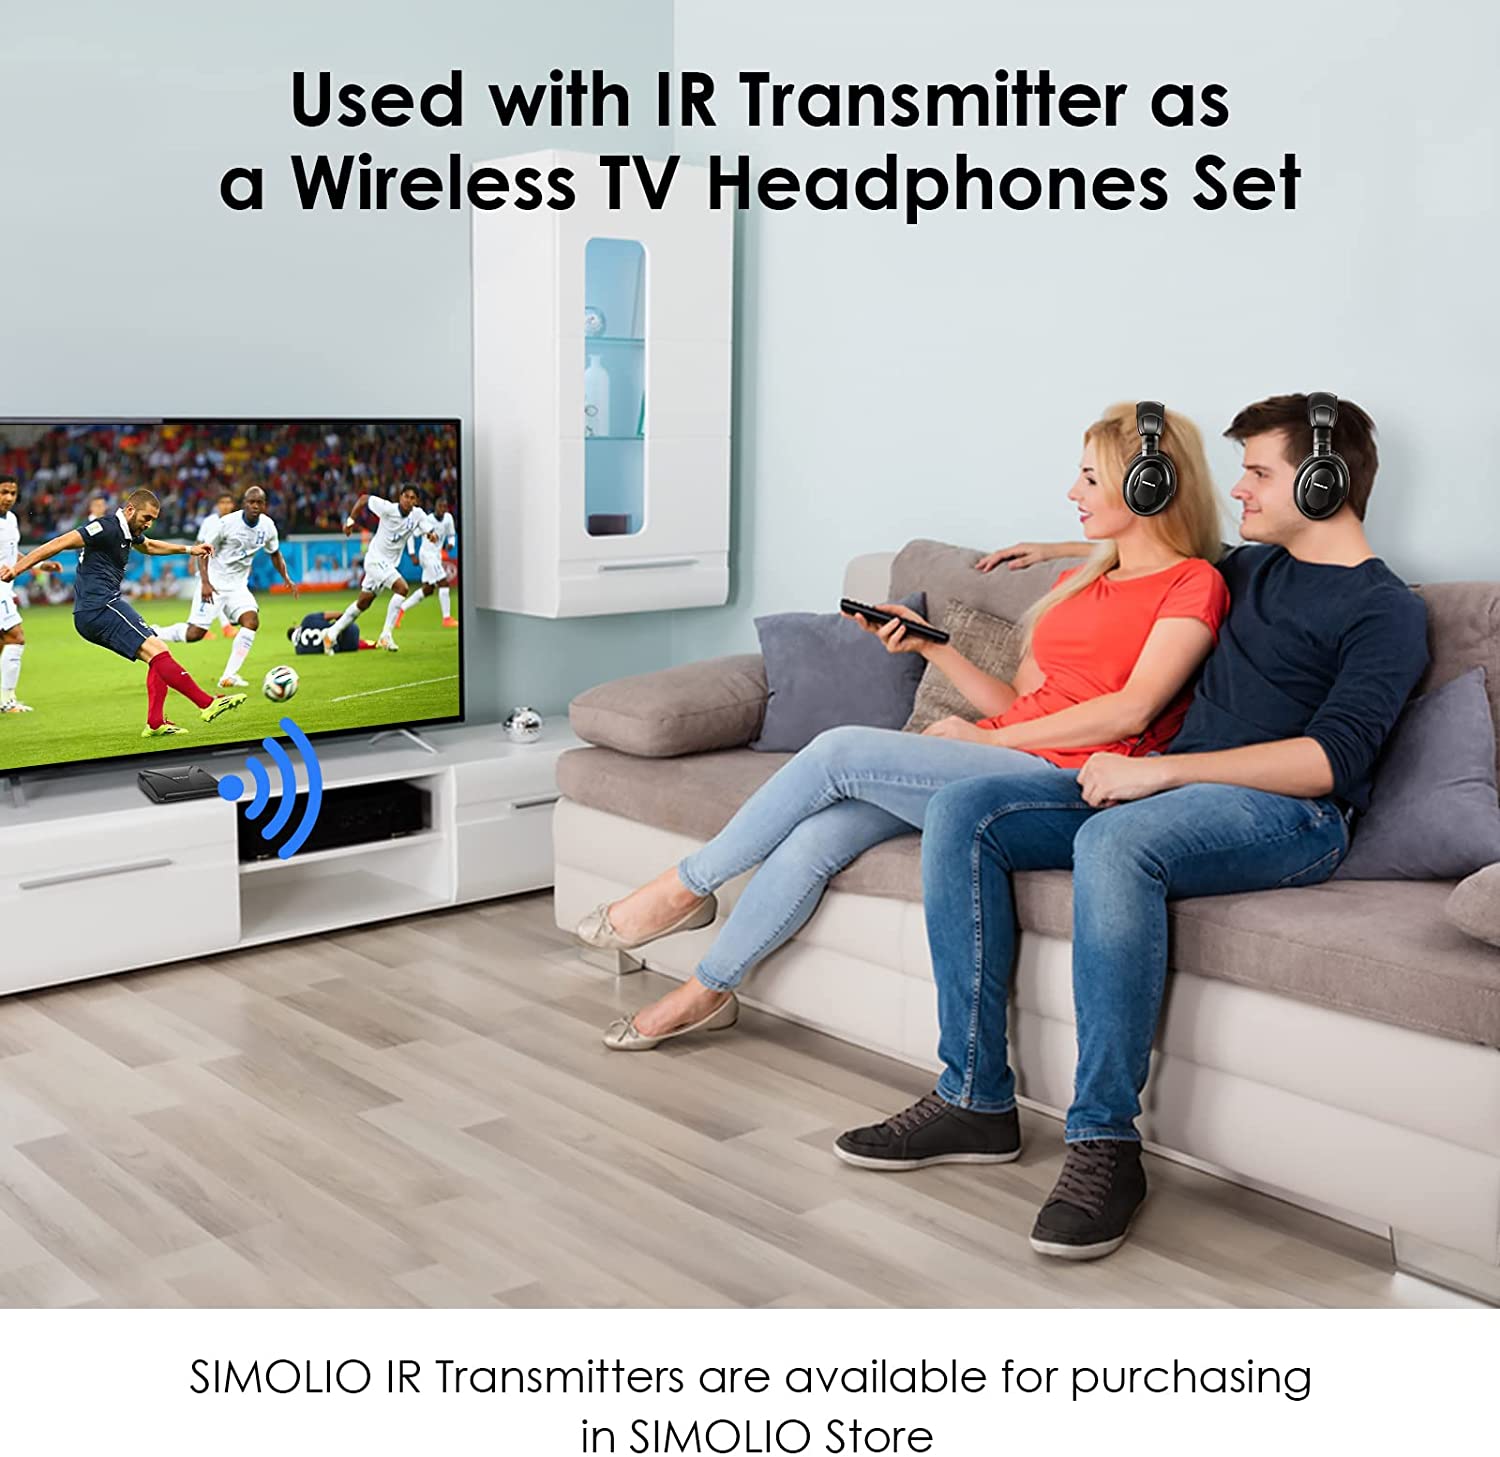 SIMOLIO wireless IR car headpphones for kids and adults work on TV SM-568